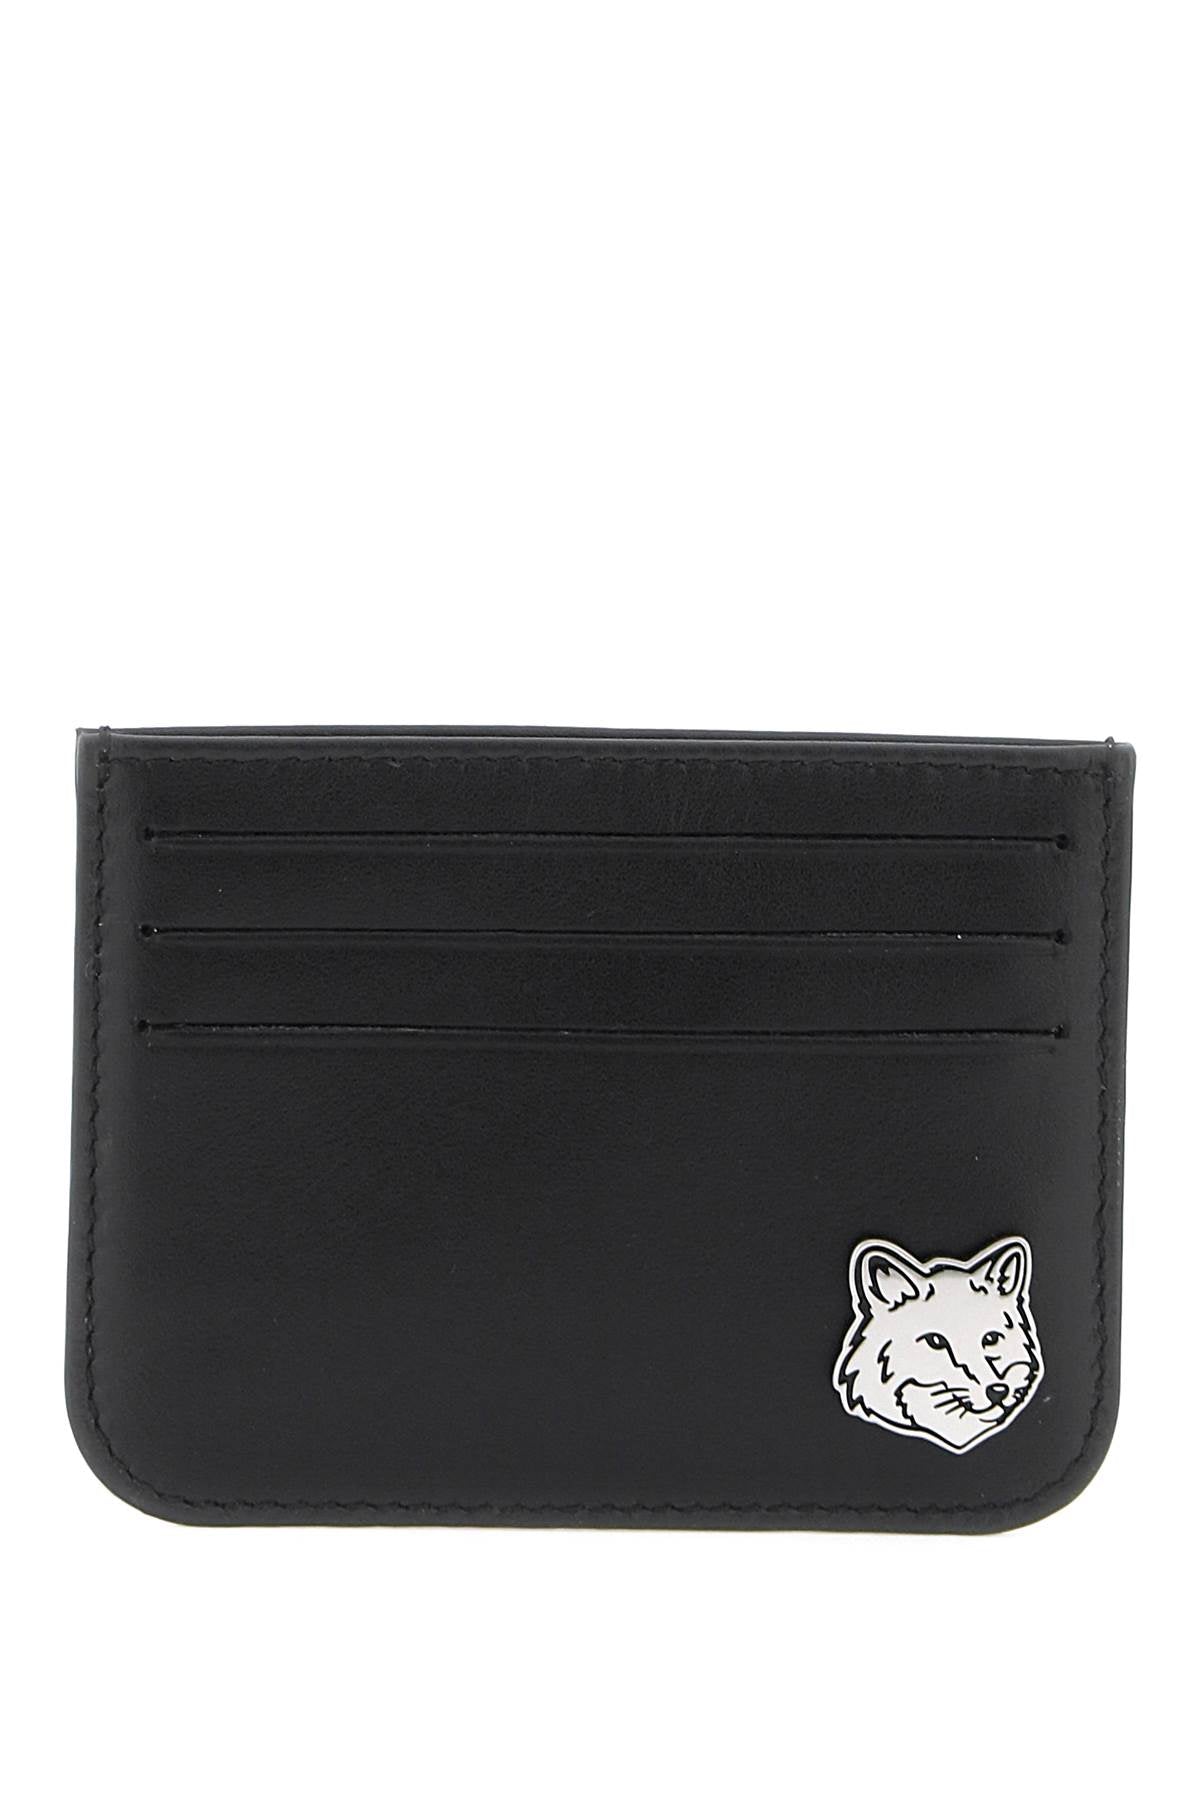 Maison Kitsune Fox Head Card Holder   Black